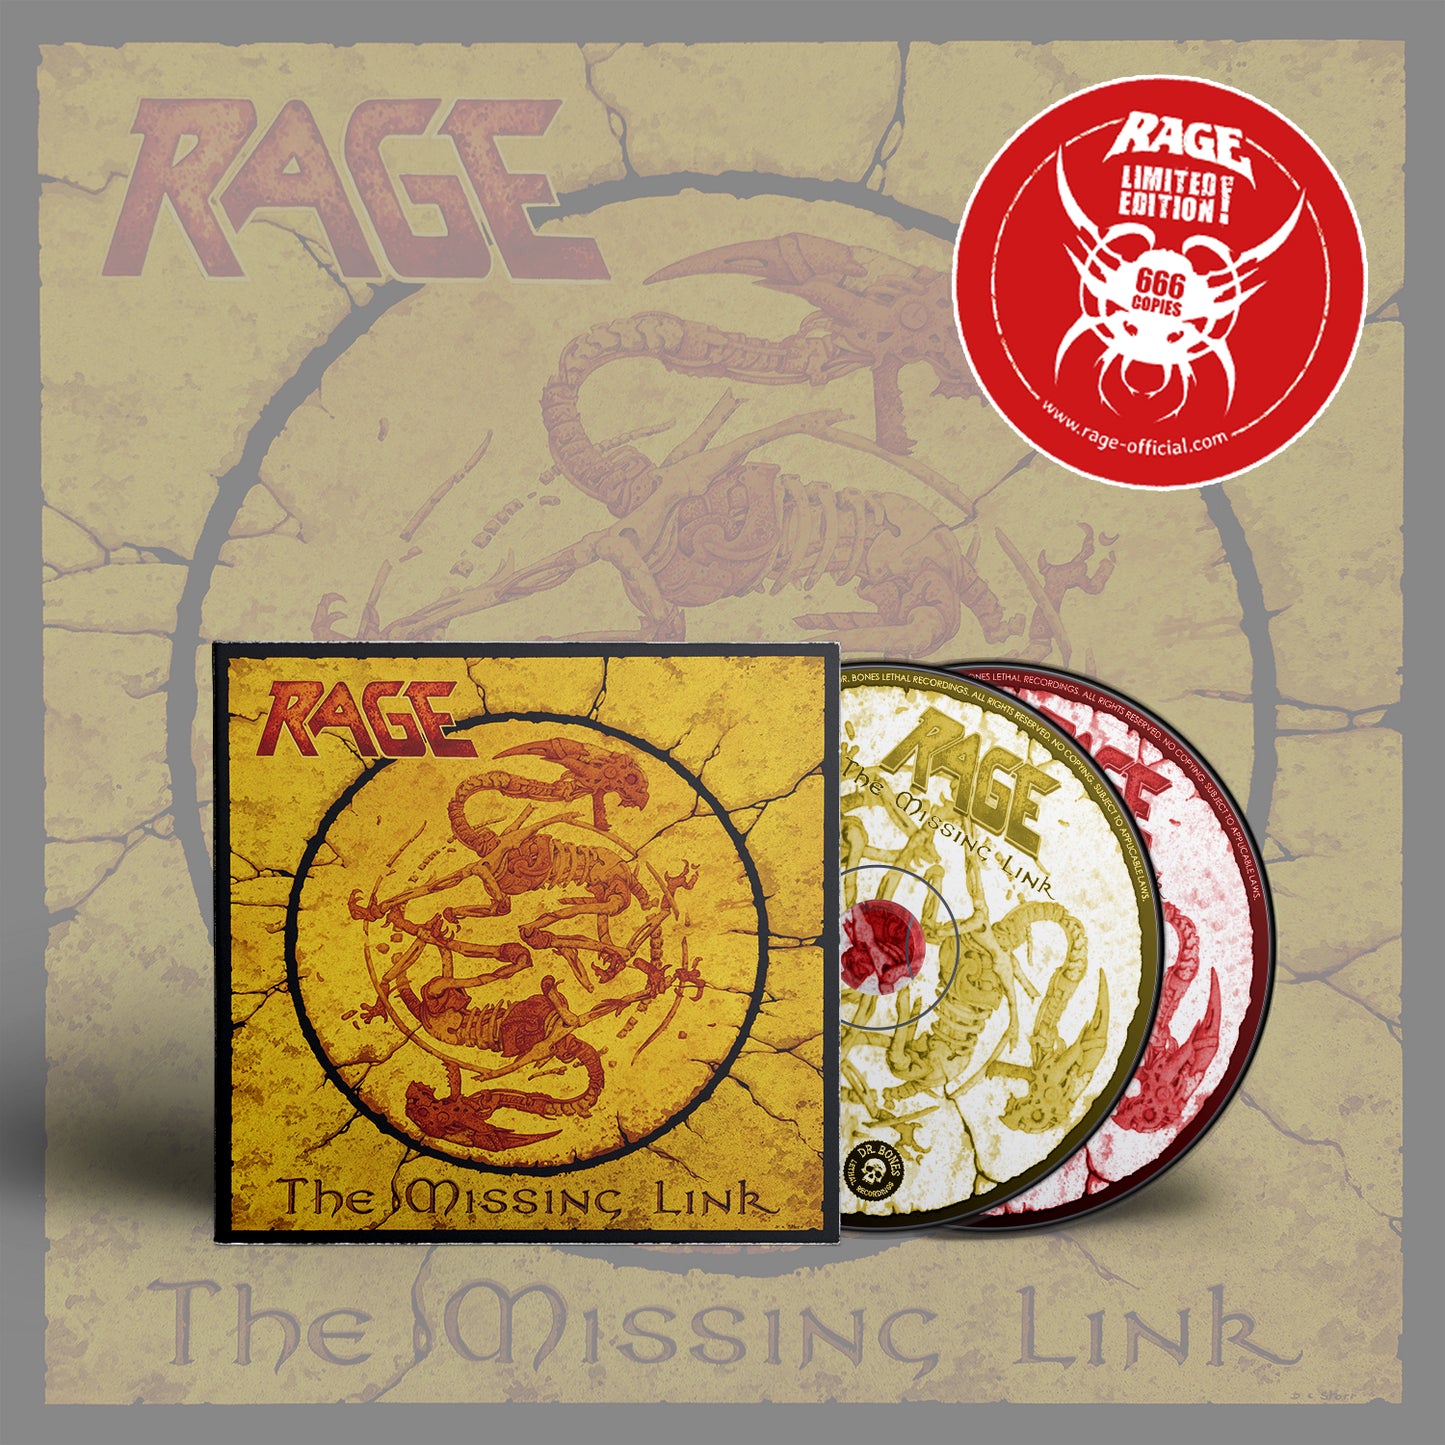 2CD "The Missing Link" Digipack